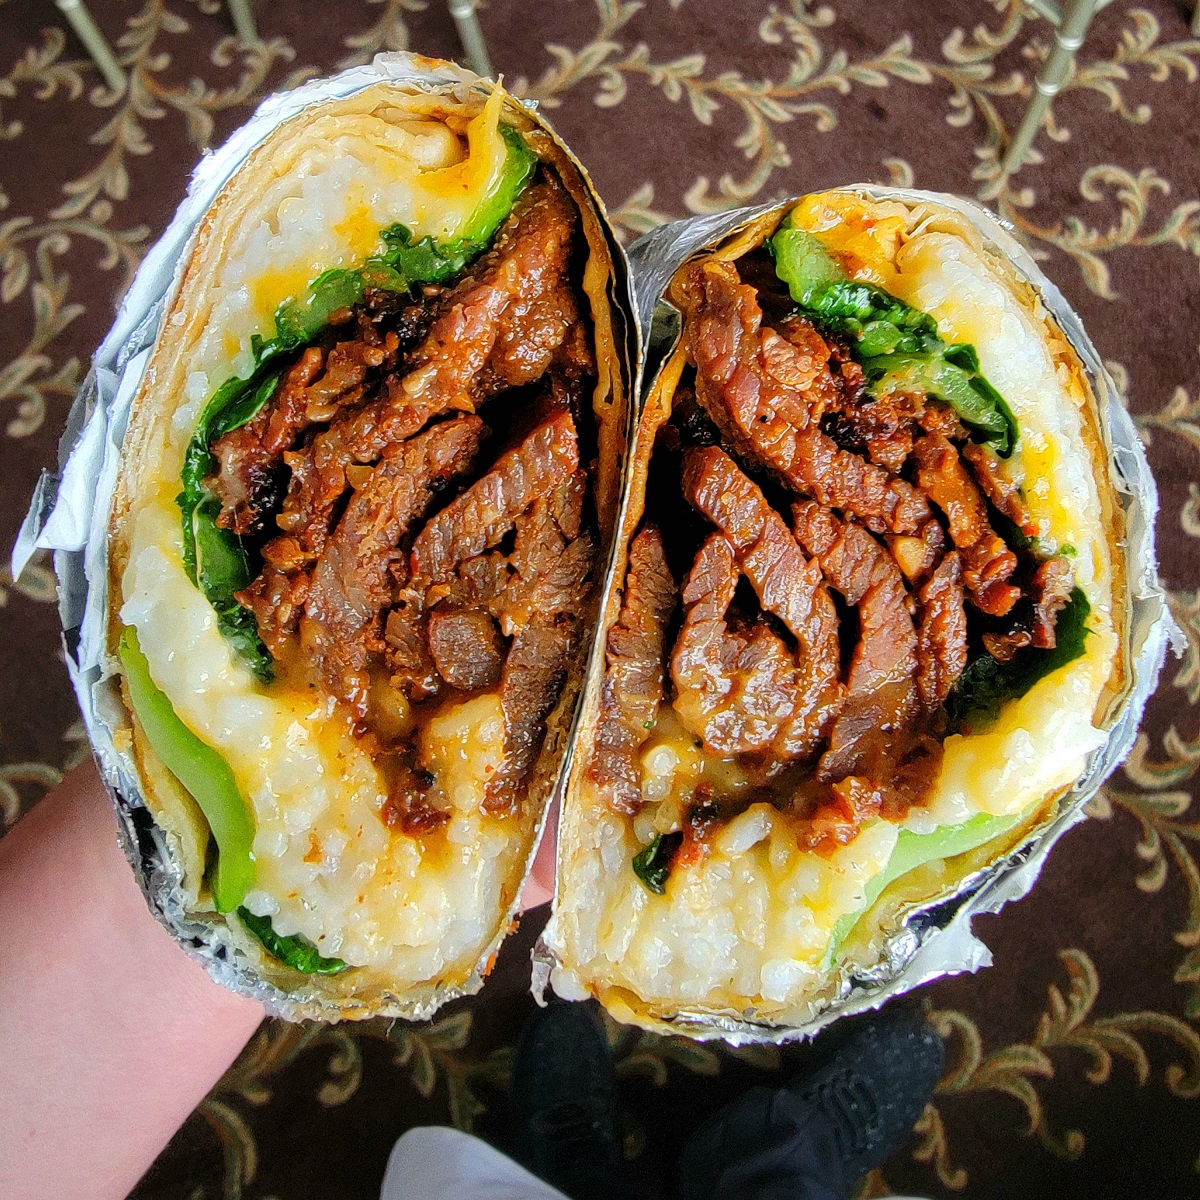 Bulgogi Burrito With Bok Choy, Rice, And Cheese. We Call It The "Korrito"